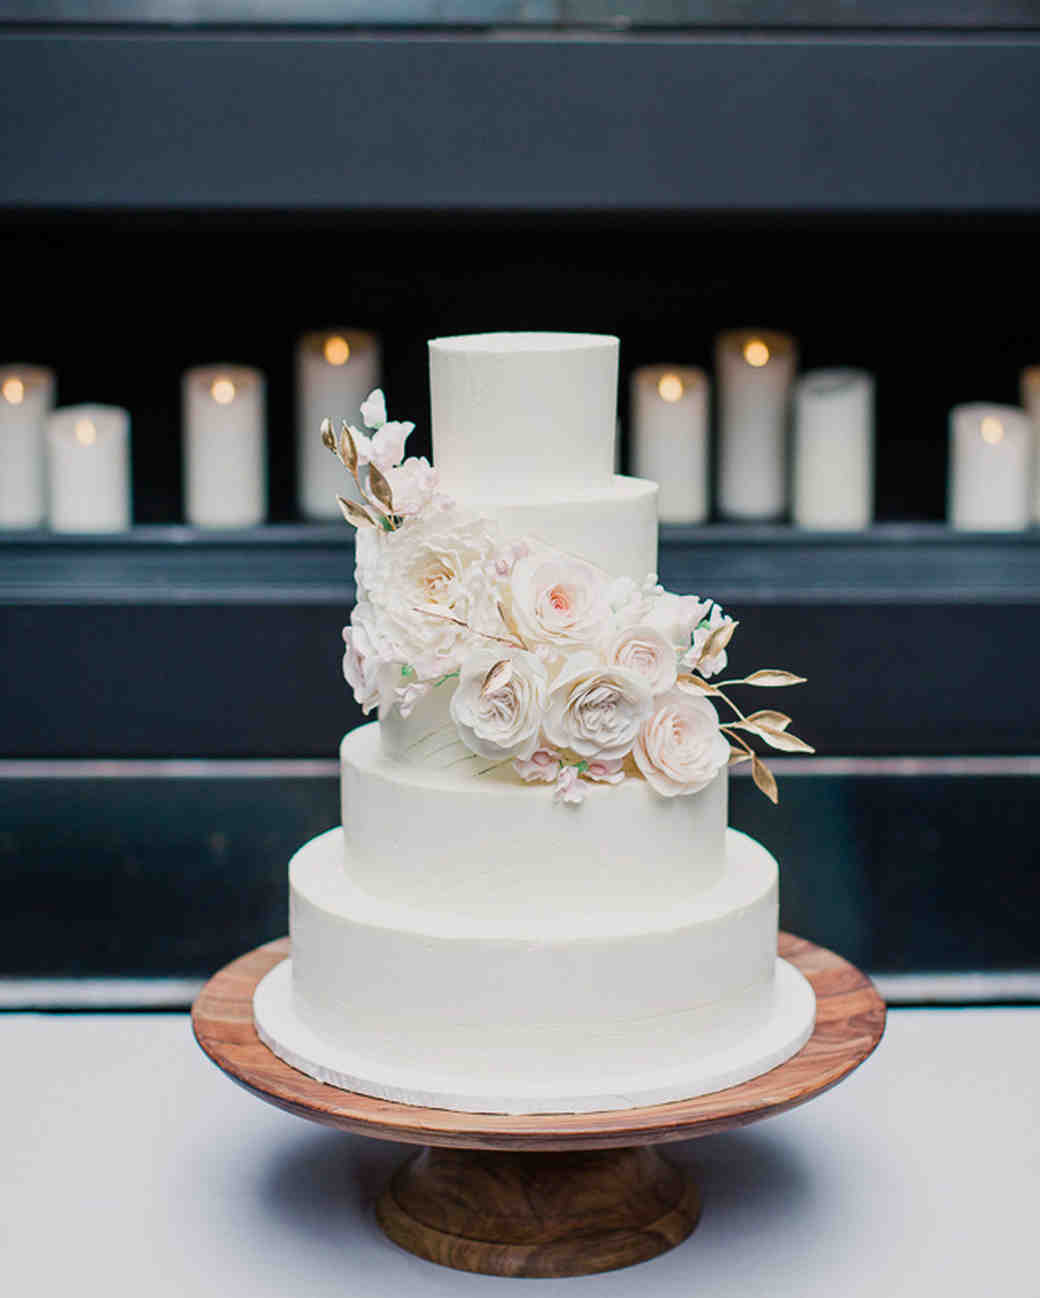 Www.wedding Cakes
 The 25 Best Wedding Cakes